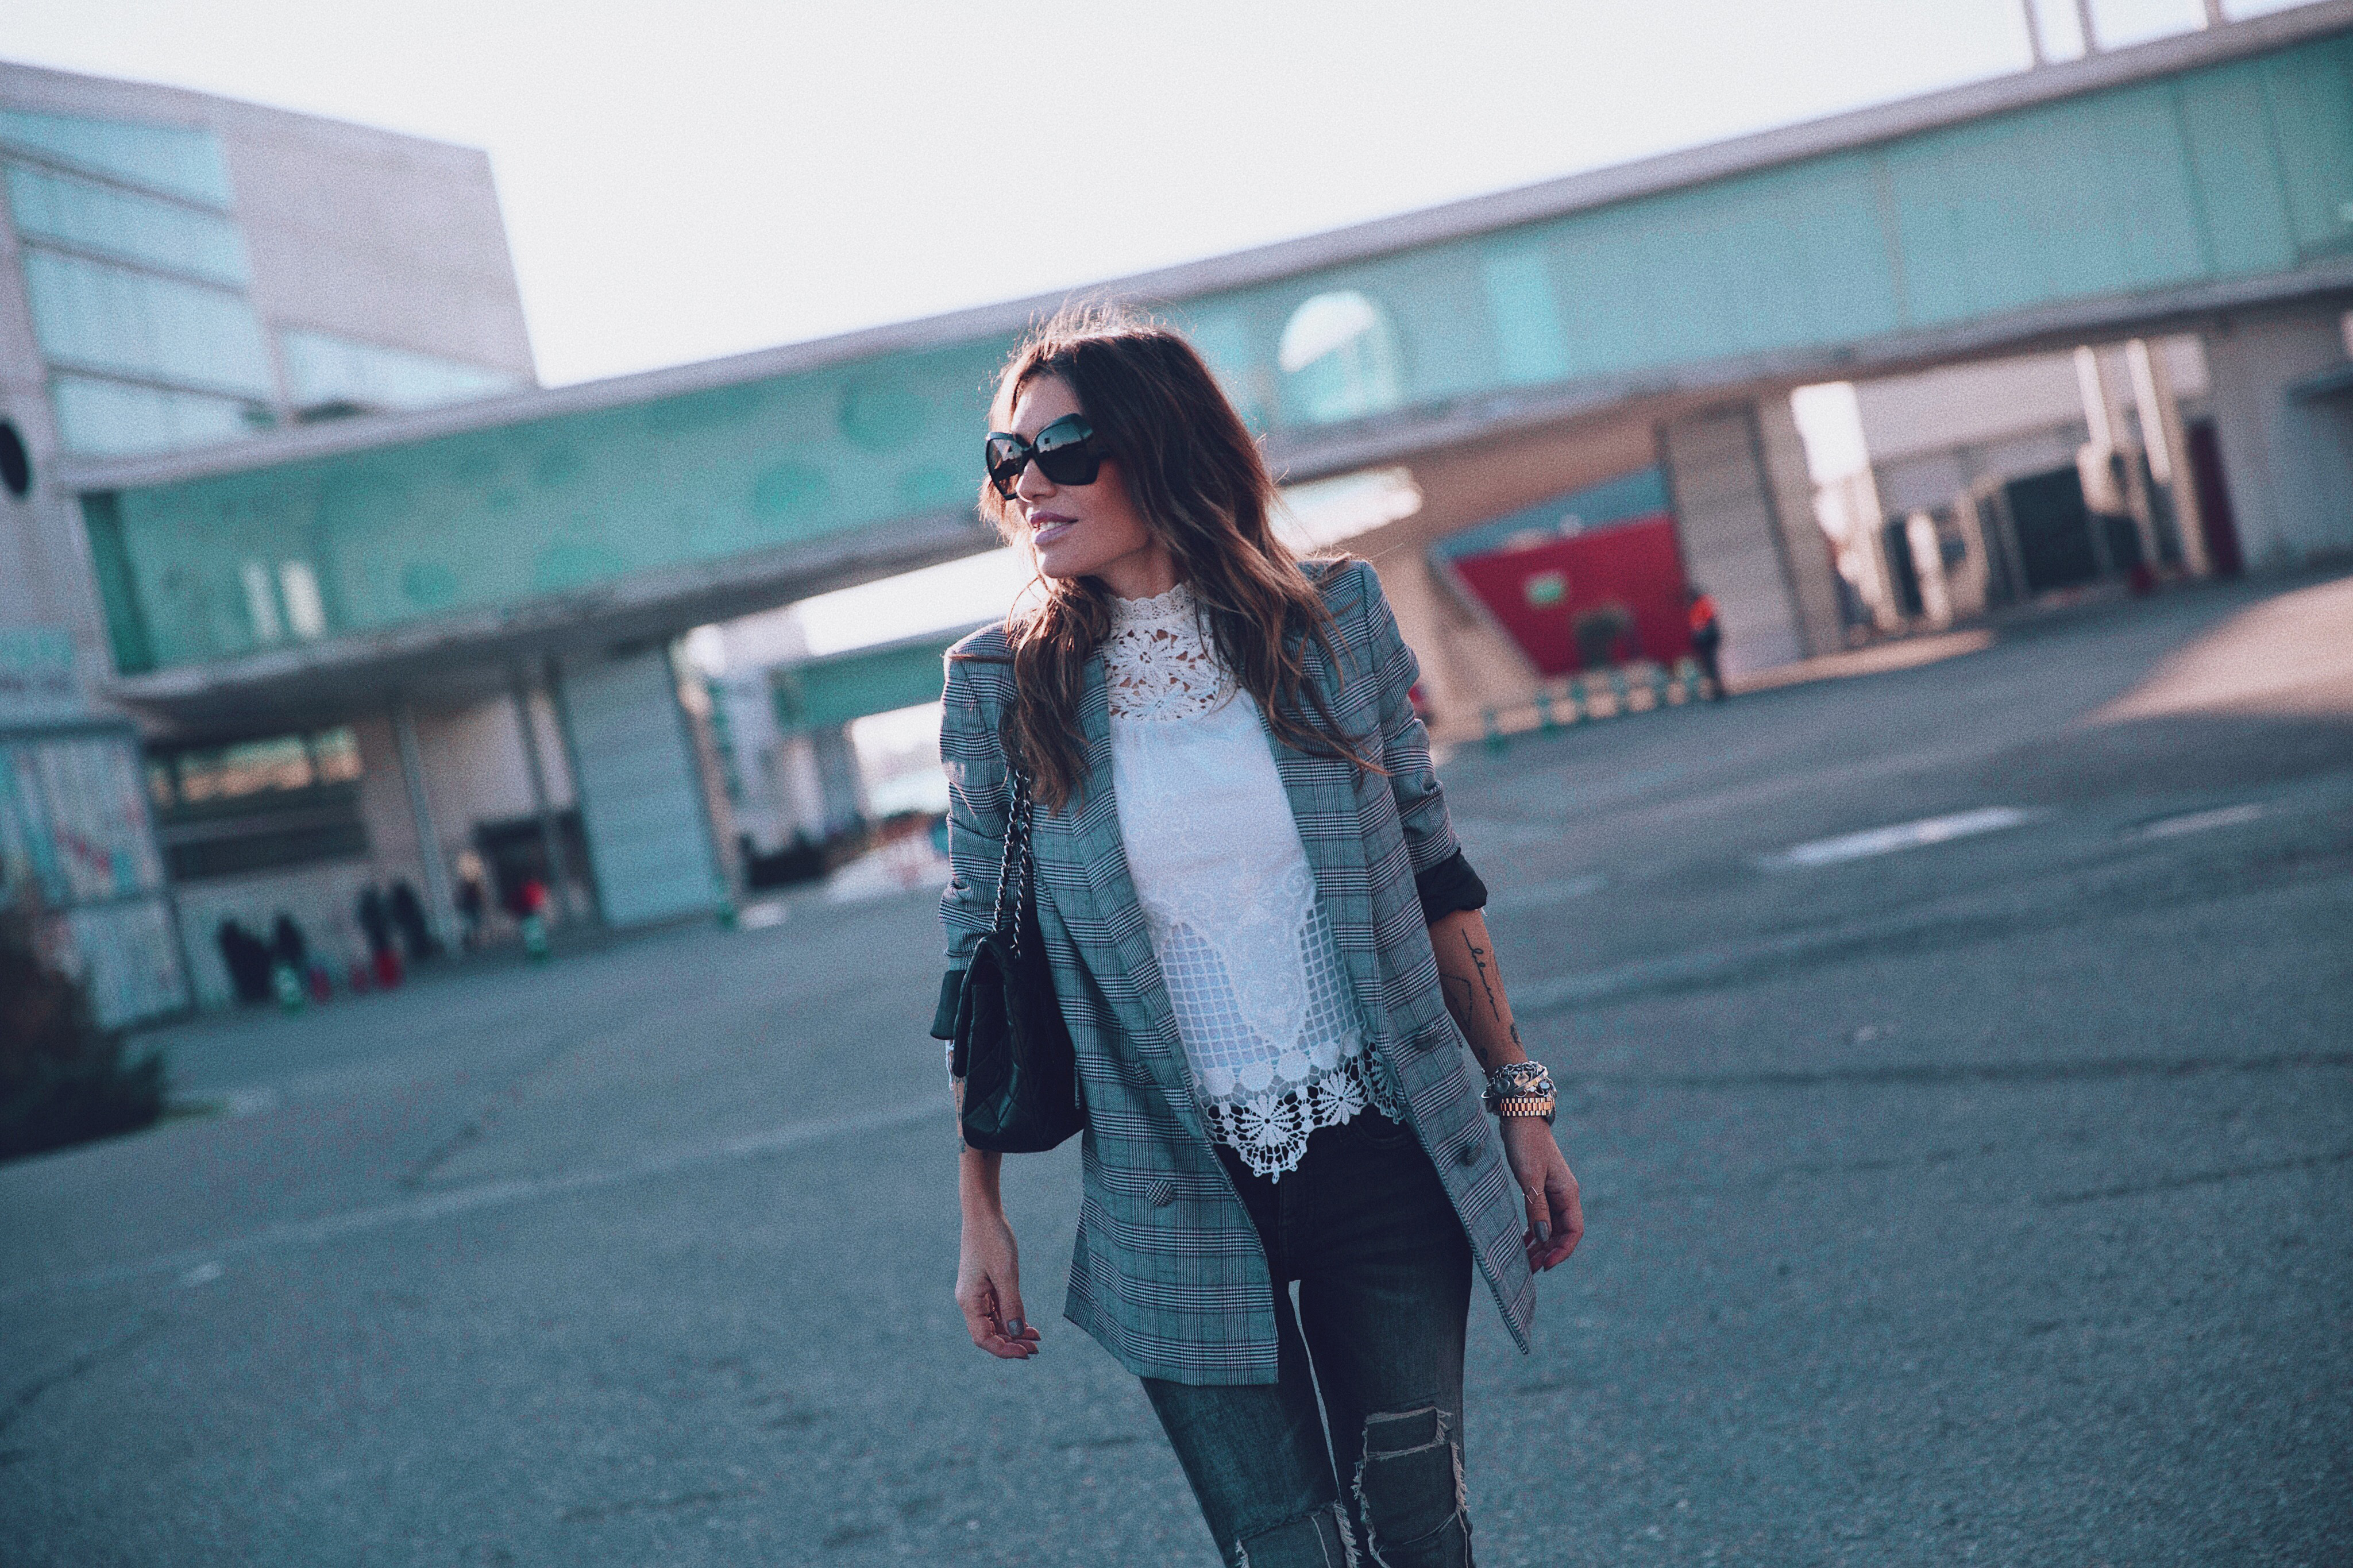 Bárbara Crespo streetstyle. Blazer, blouse and Doctor Martens boots. Chanel bag. Chanel sunglasses